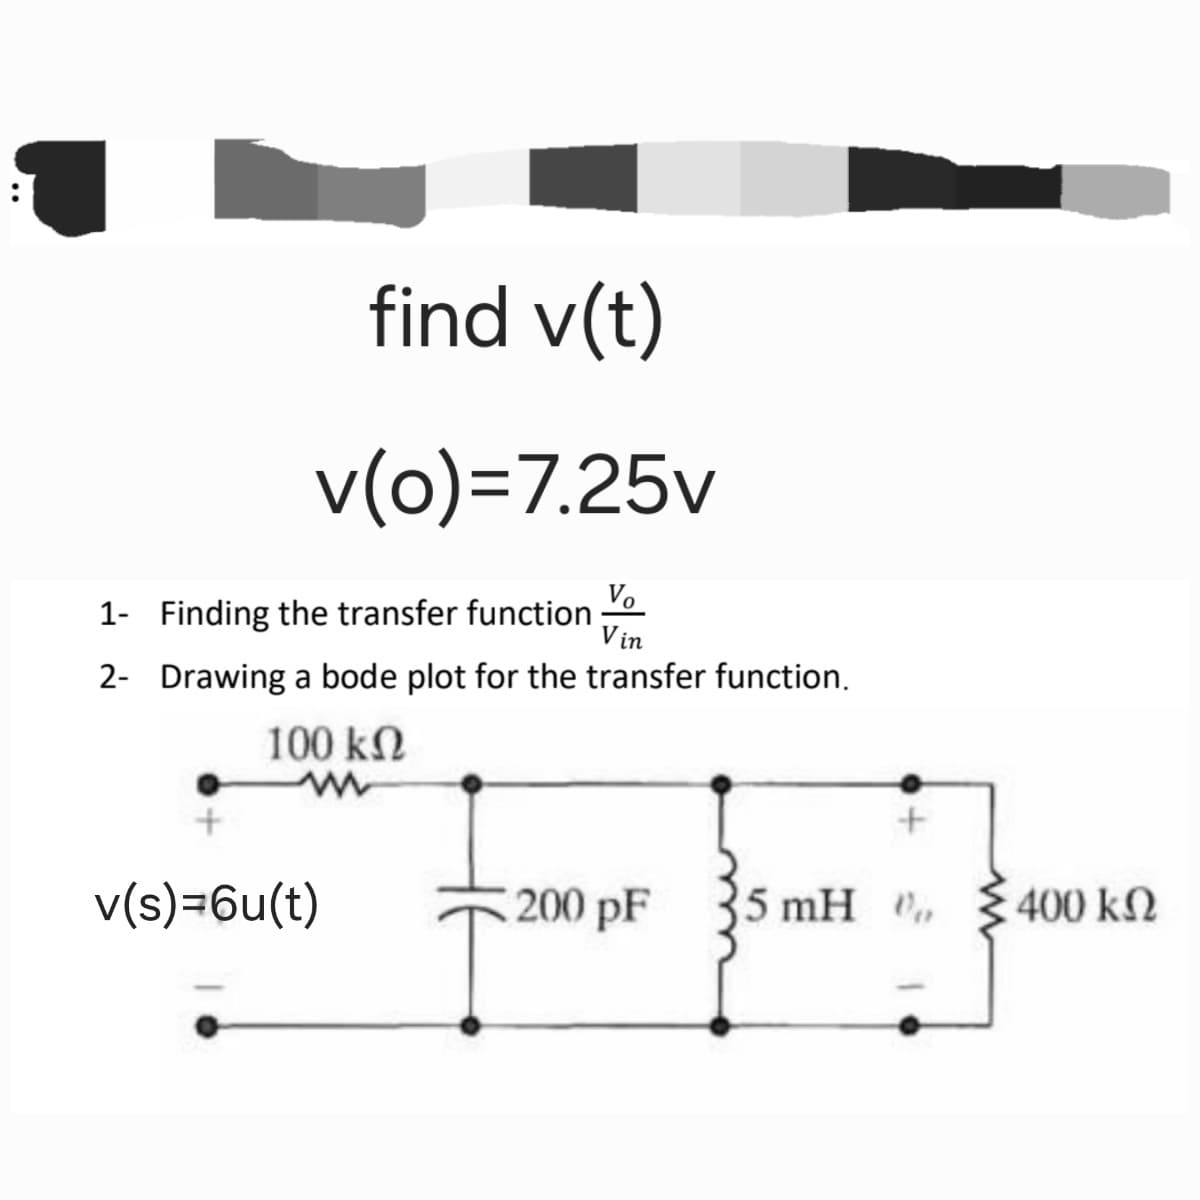 find v(t)
v(o)=7.25v
1- Finding the transfer function
Vo
Vin
2- Drawing a bode plot for the transfer function.
100 ΚΩ
w
v(s)=6u(t)
+
200 pF
25 mH
400 ΚΩ